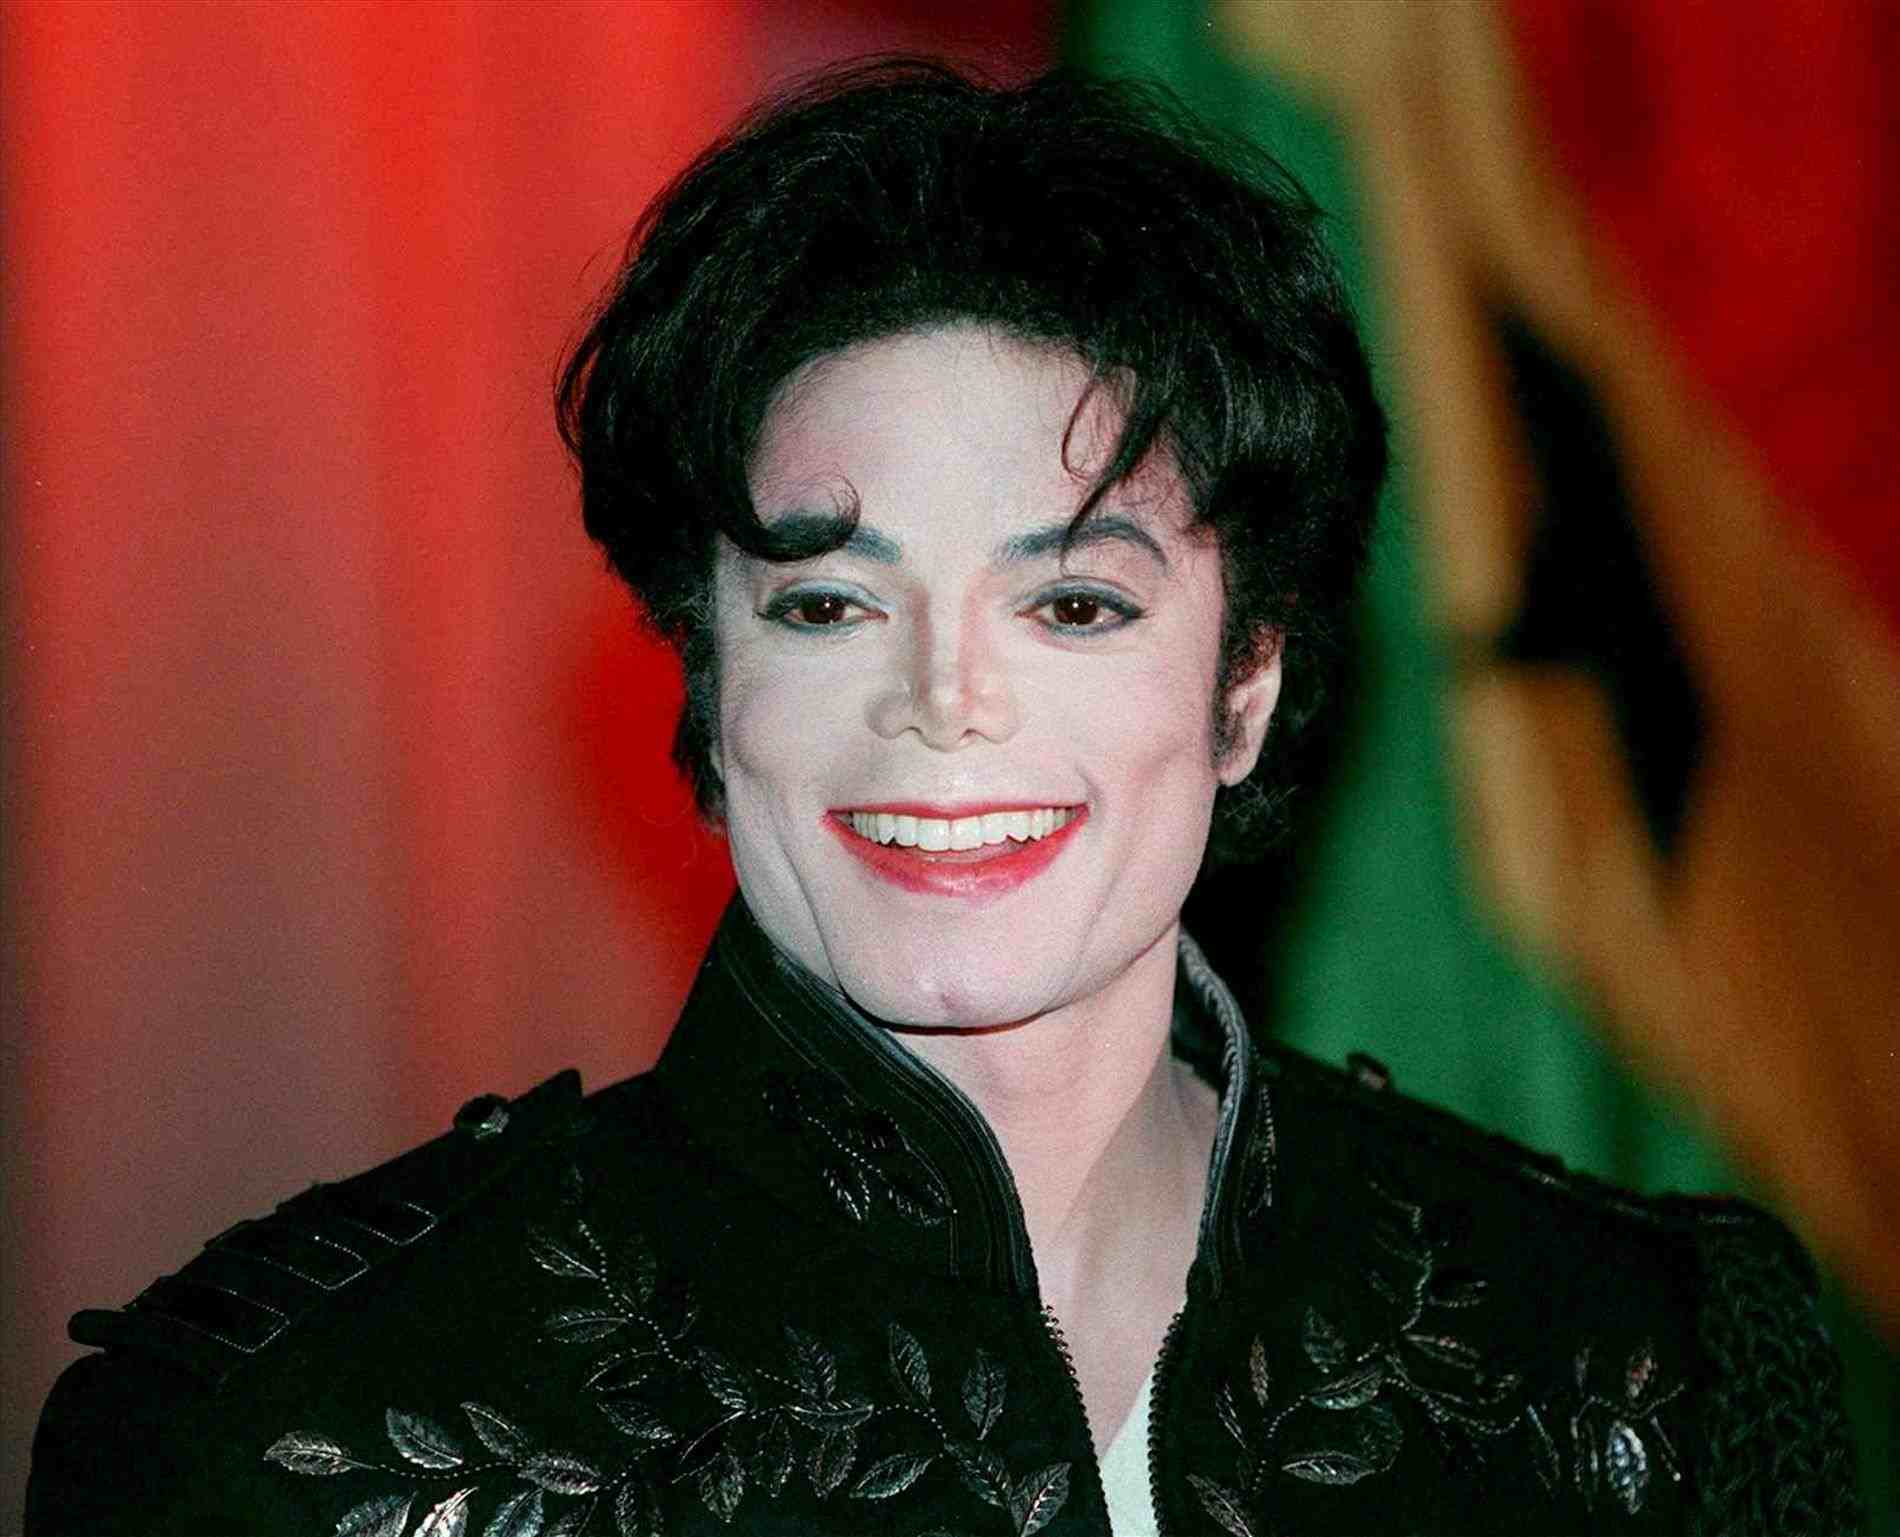 Nr Rhweborg Male Michael Jackson Wallpaper Smile Celebrities